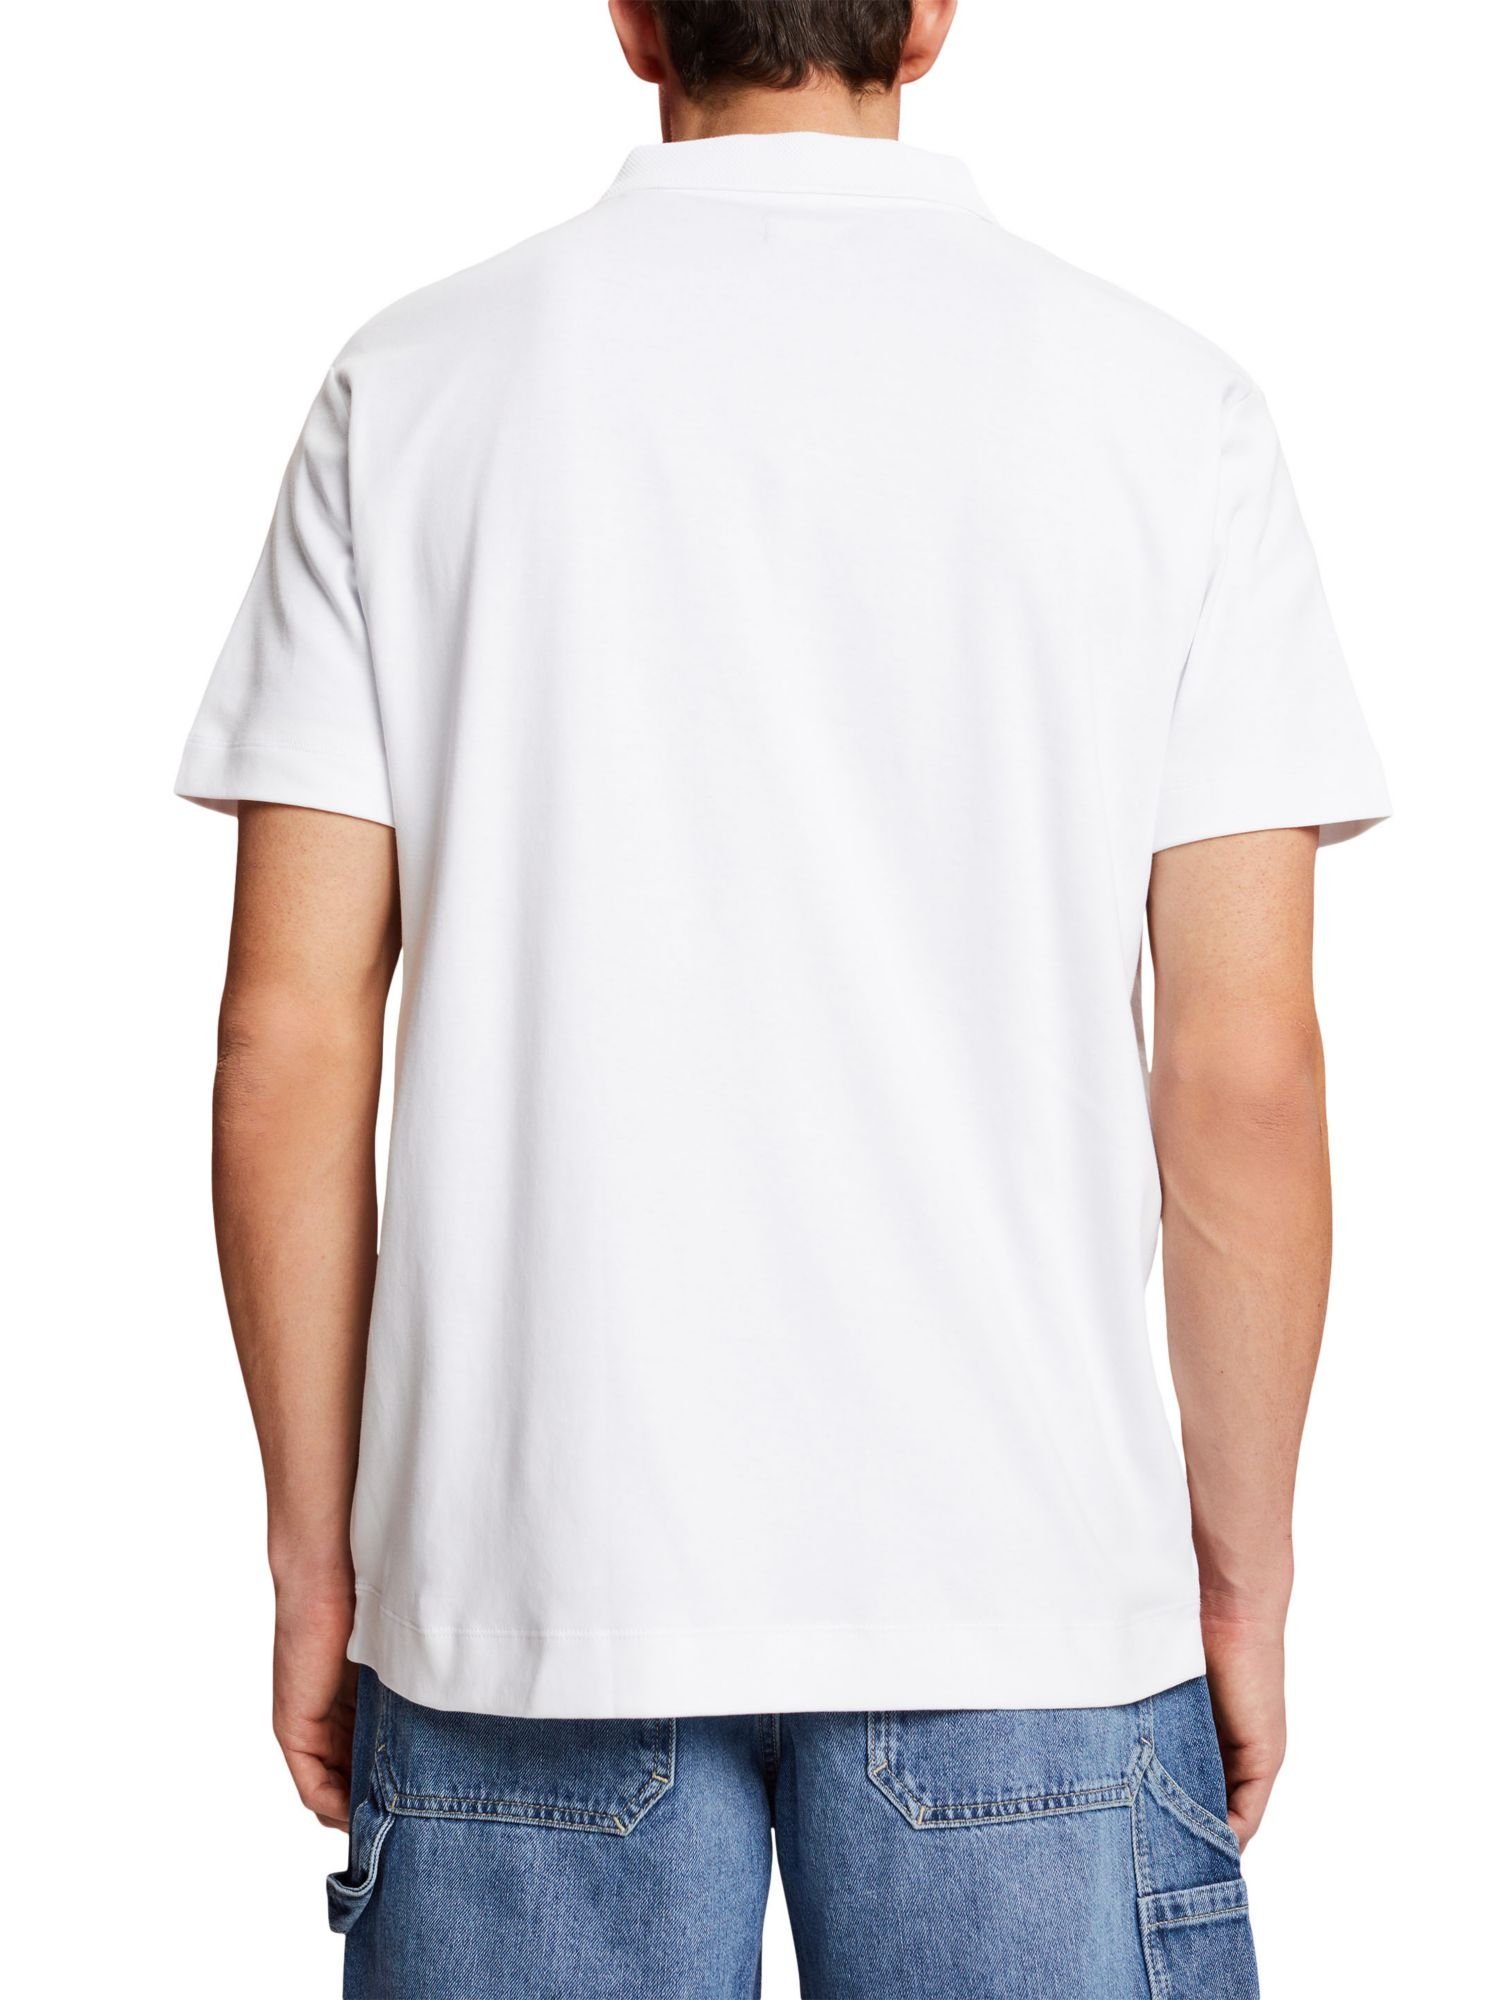 Esprit Pima-Baumwolle Poloshirt aus Collection WHITE Poloshirt